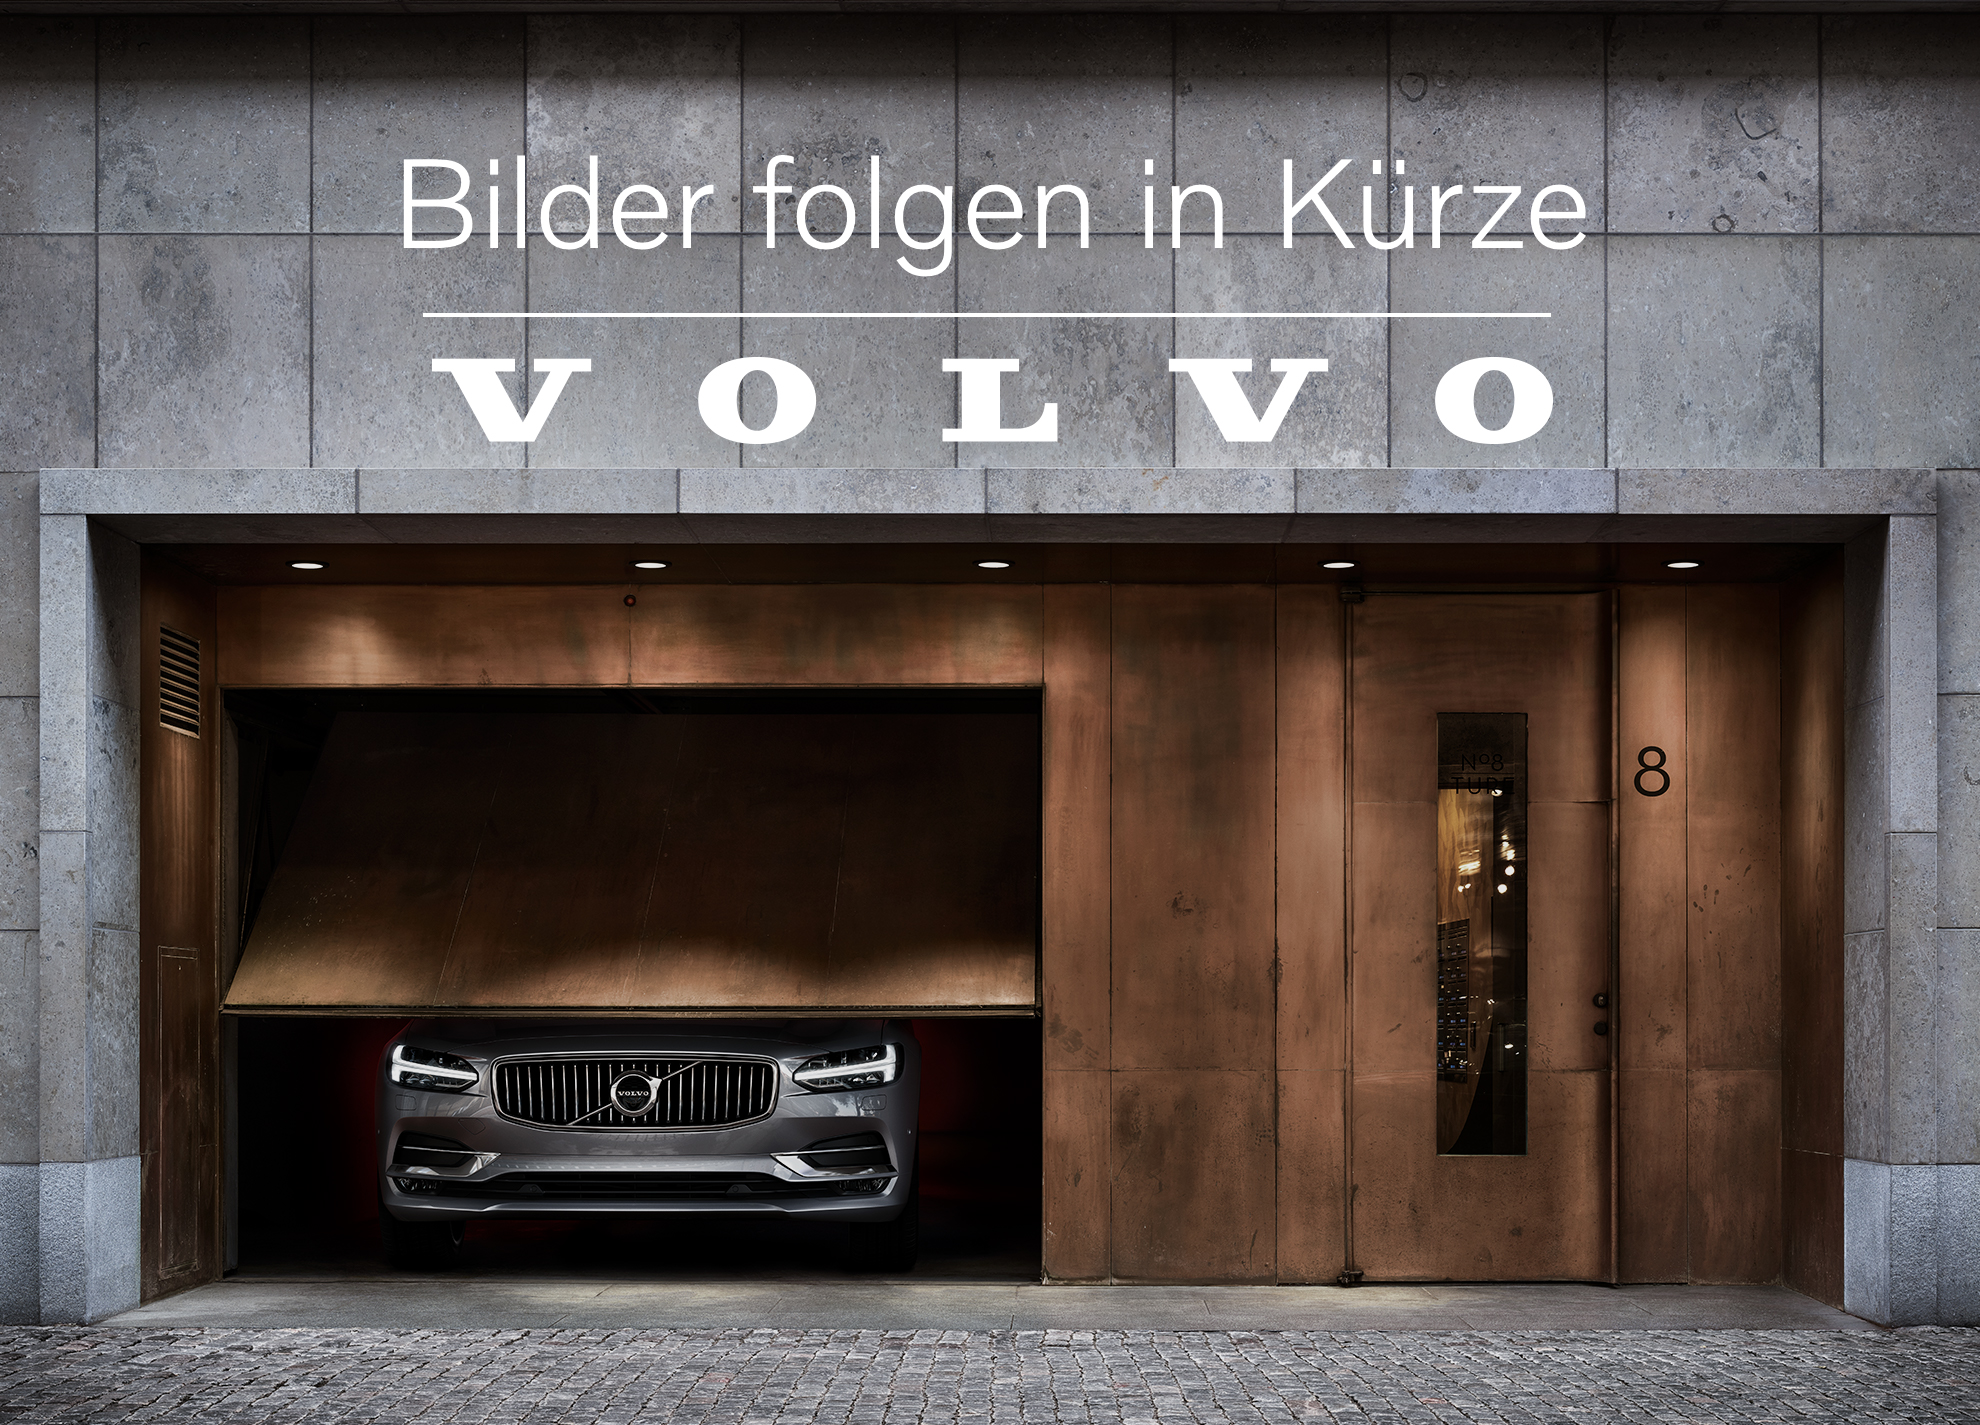 Volvo  2.0 D4 R-Design Edition